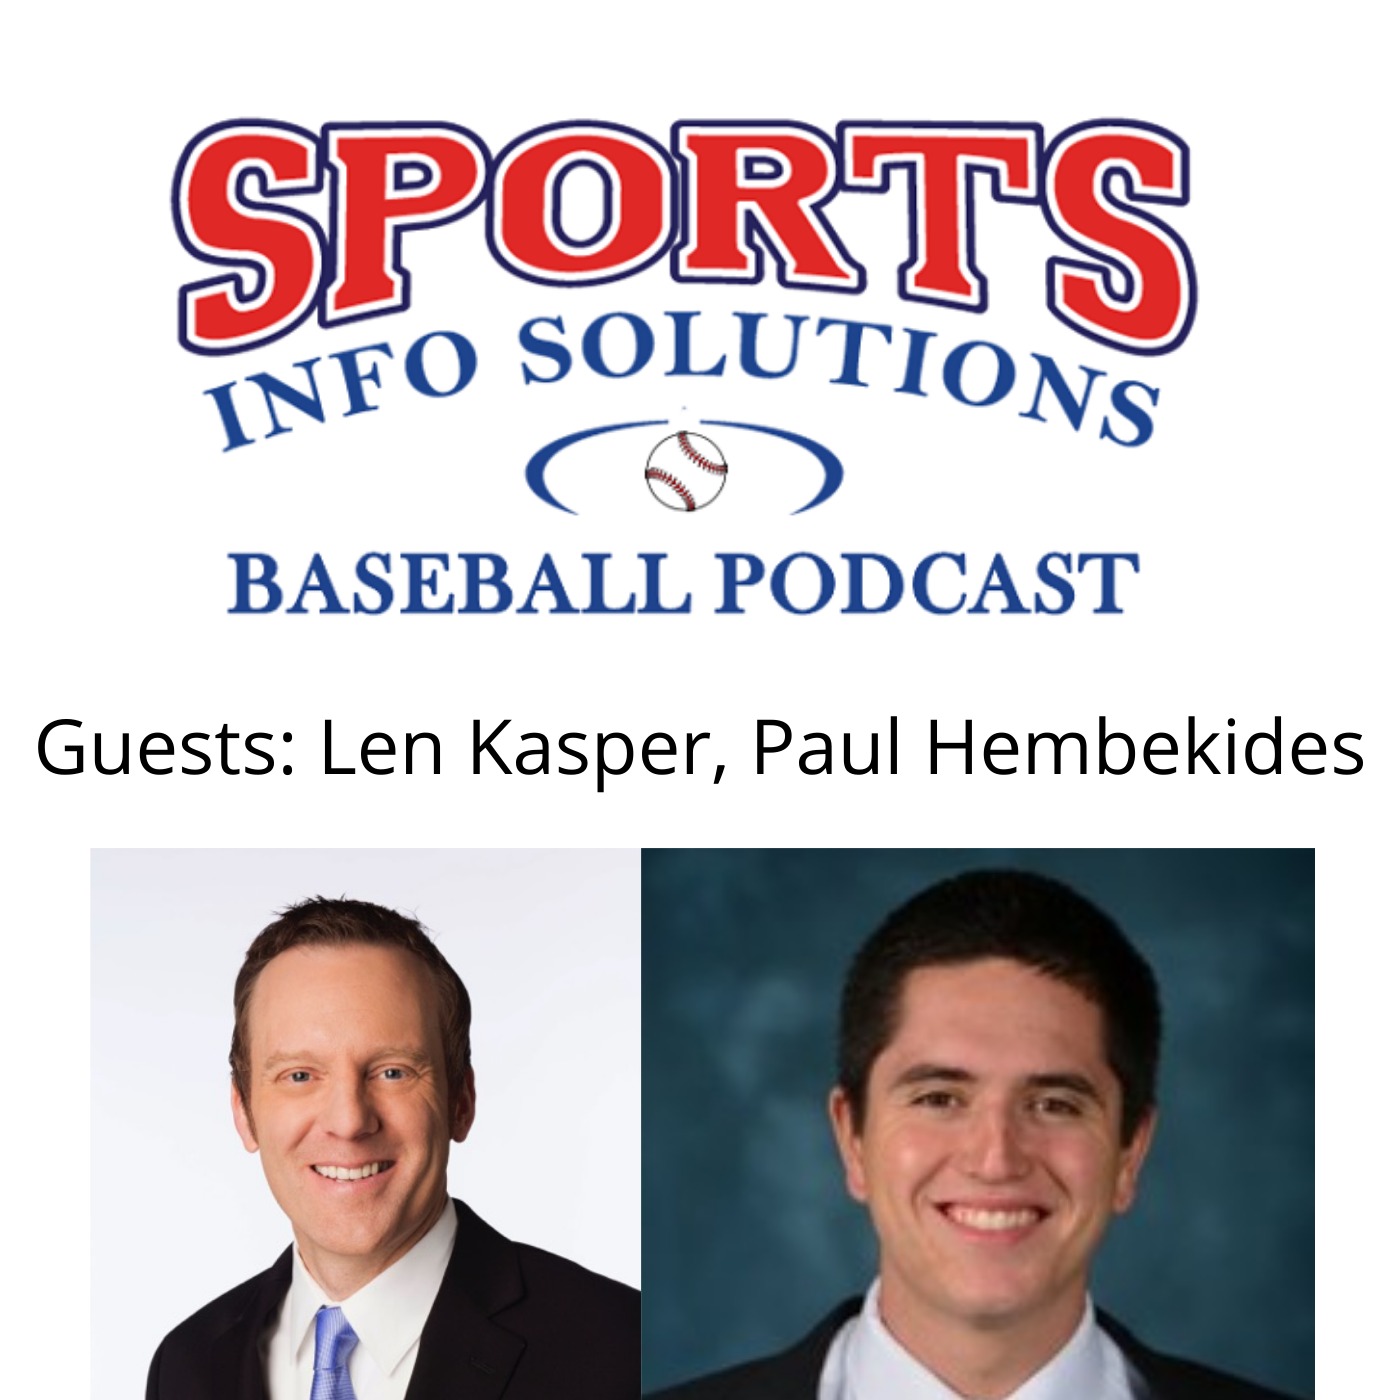 Let's Talk Fun & Smart Baseball With Len Kasper (White Sox radio) & Paul Hembekides (ESPN)